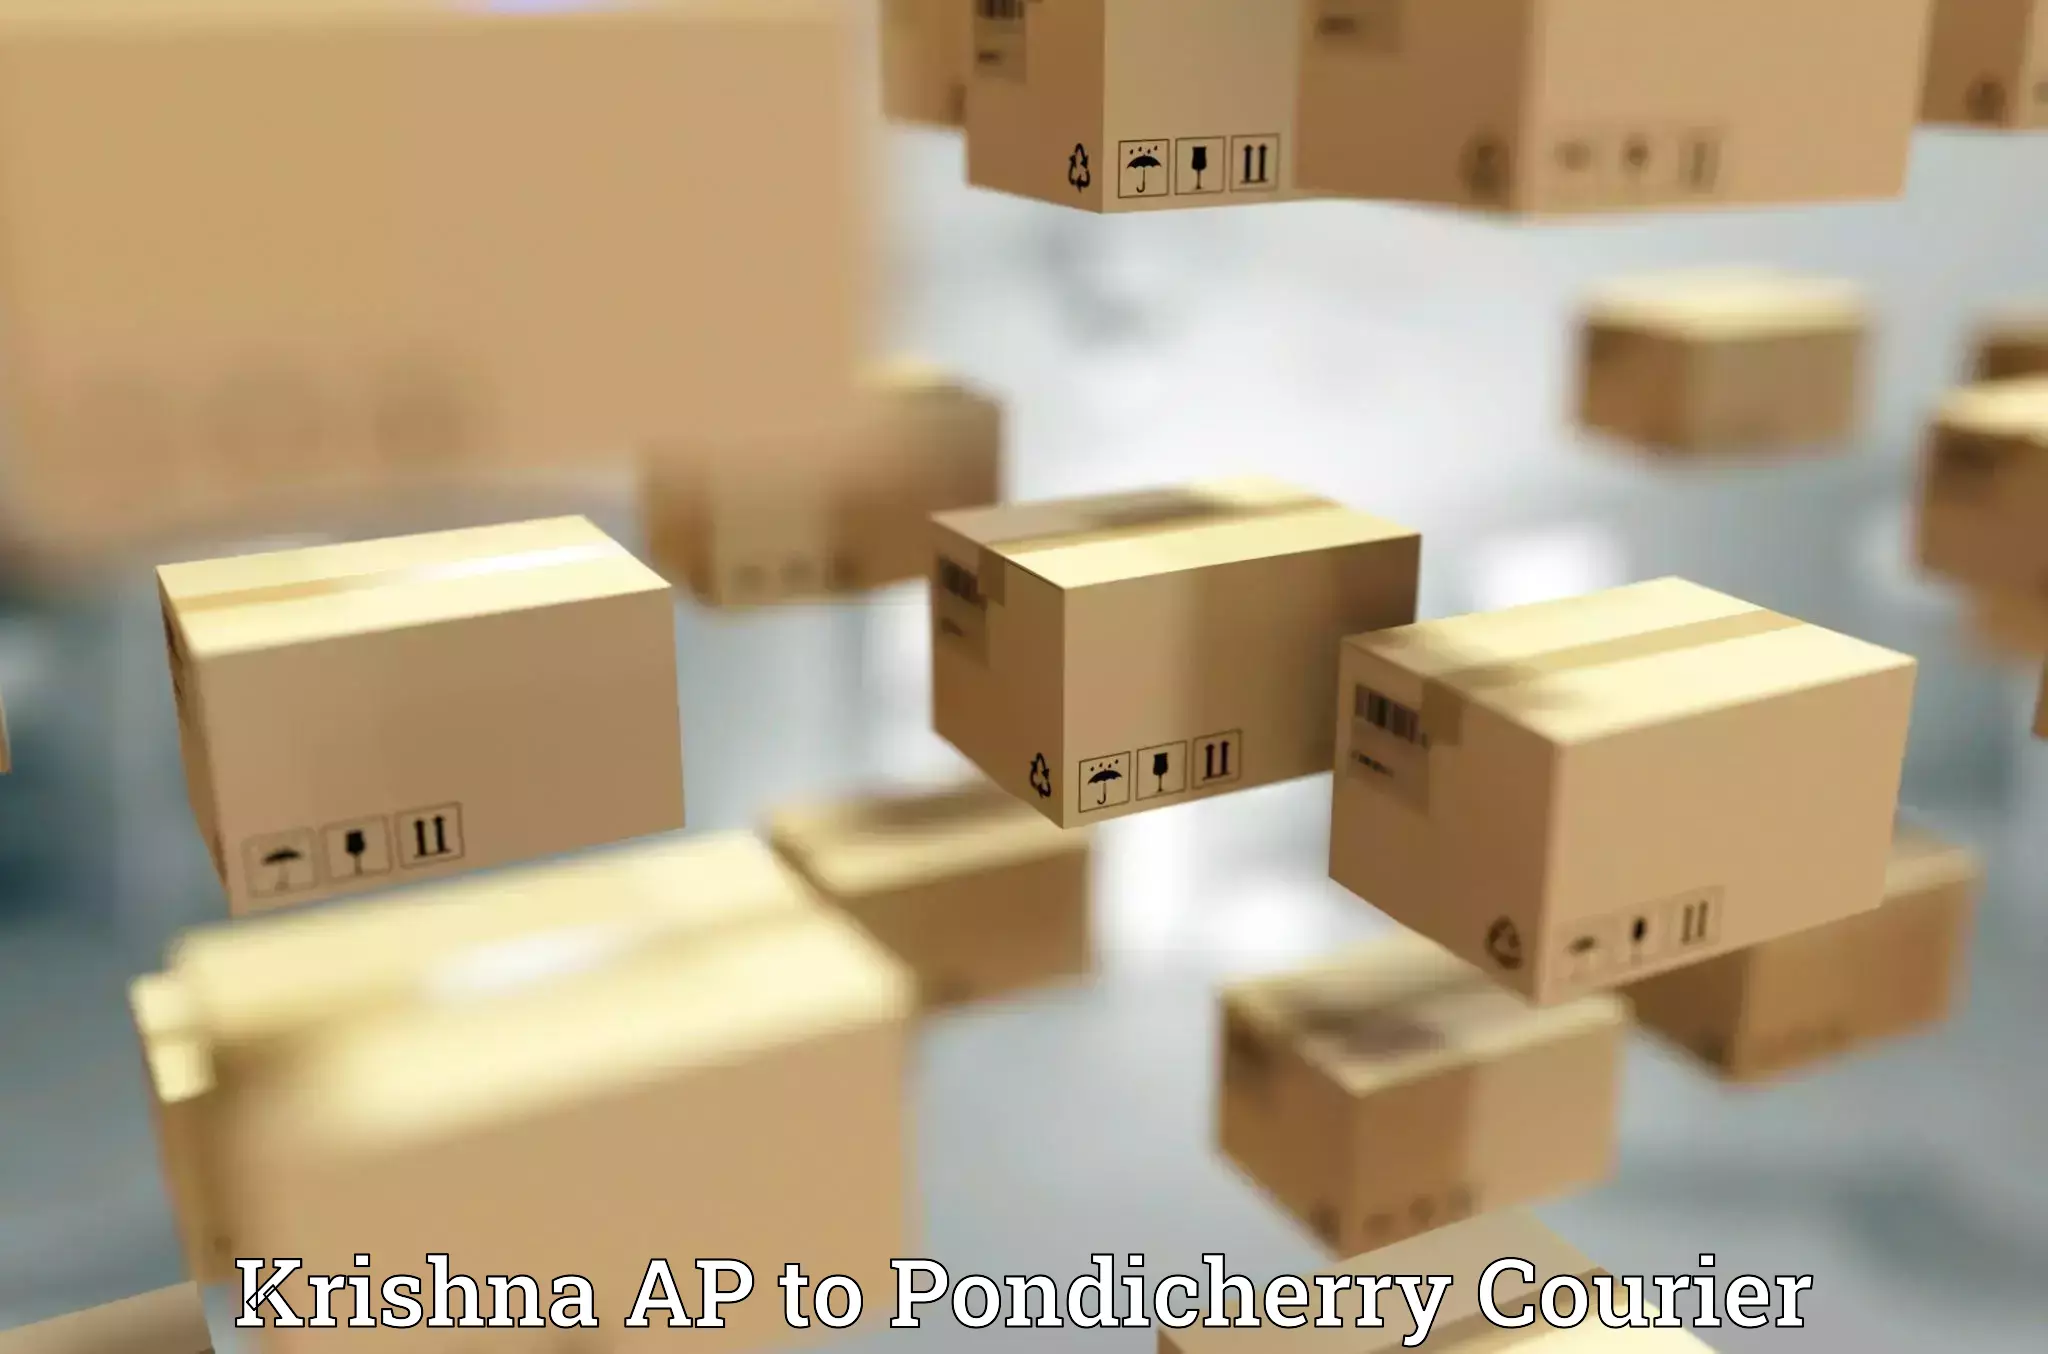 Supply chain efficiency Krishna AP to Pondicherry